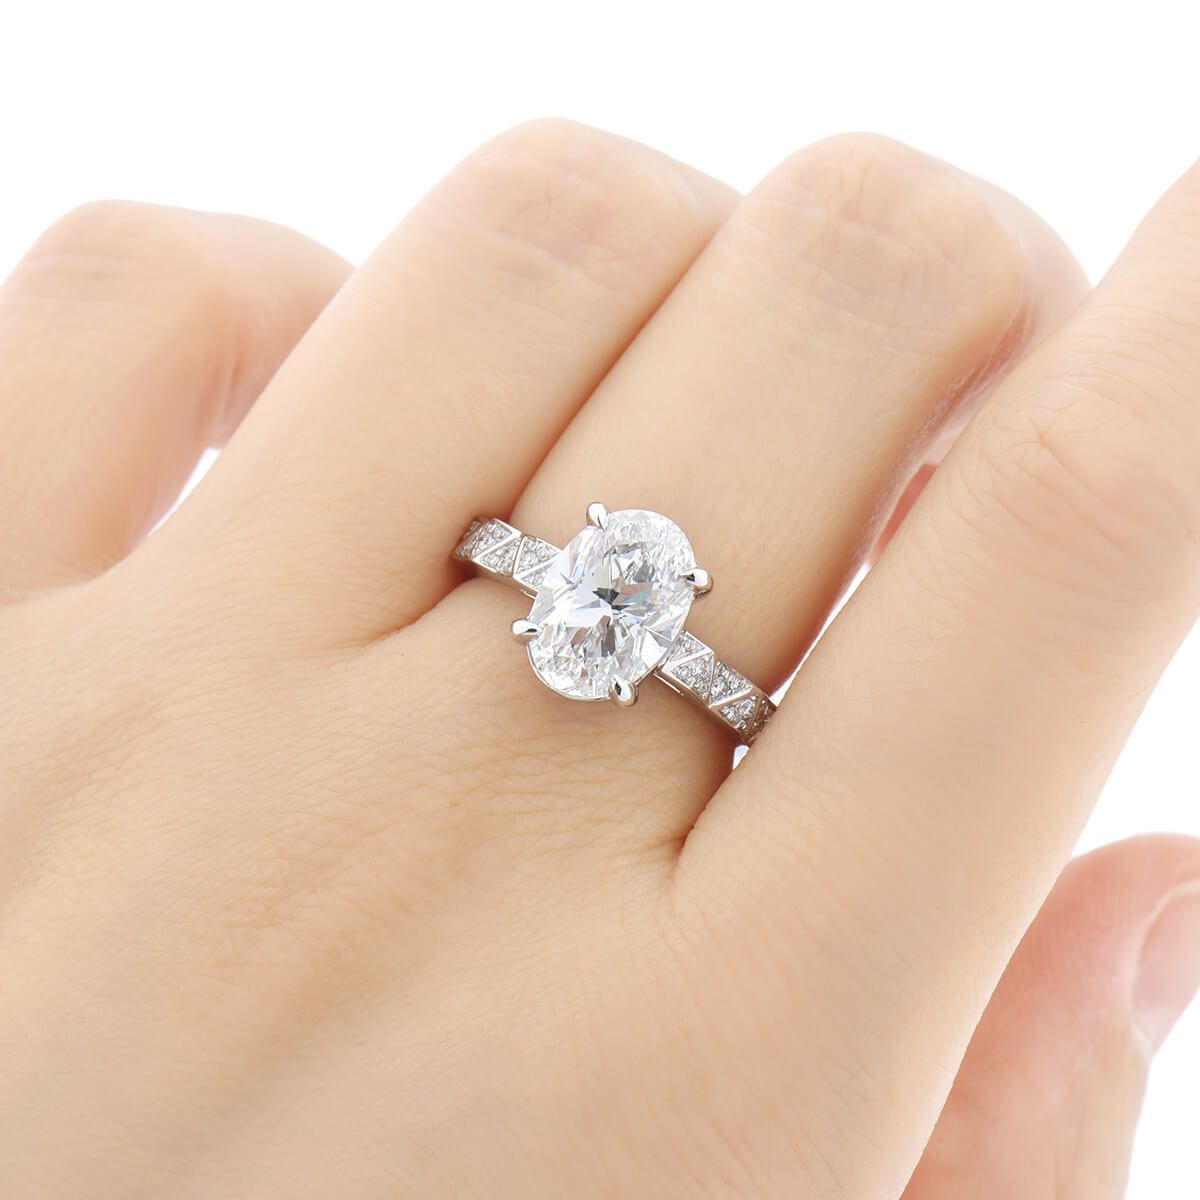  White Diamond Ring, 3.19 Ct. TW, Oval shape, GIA Certified, 6245708932